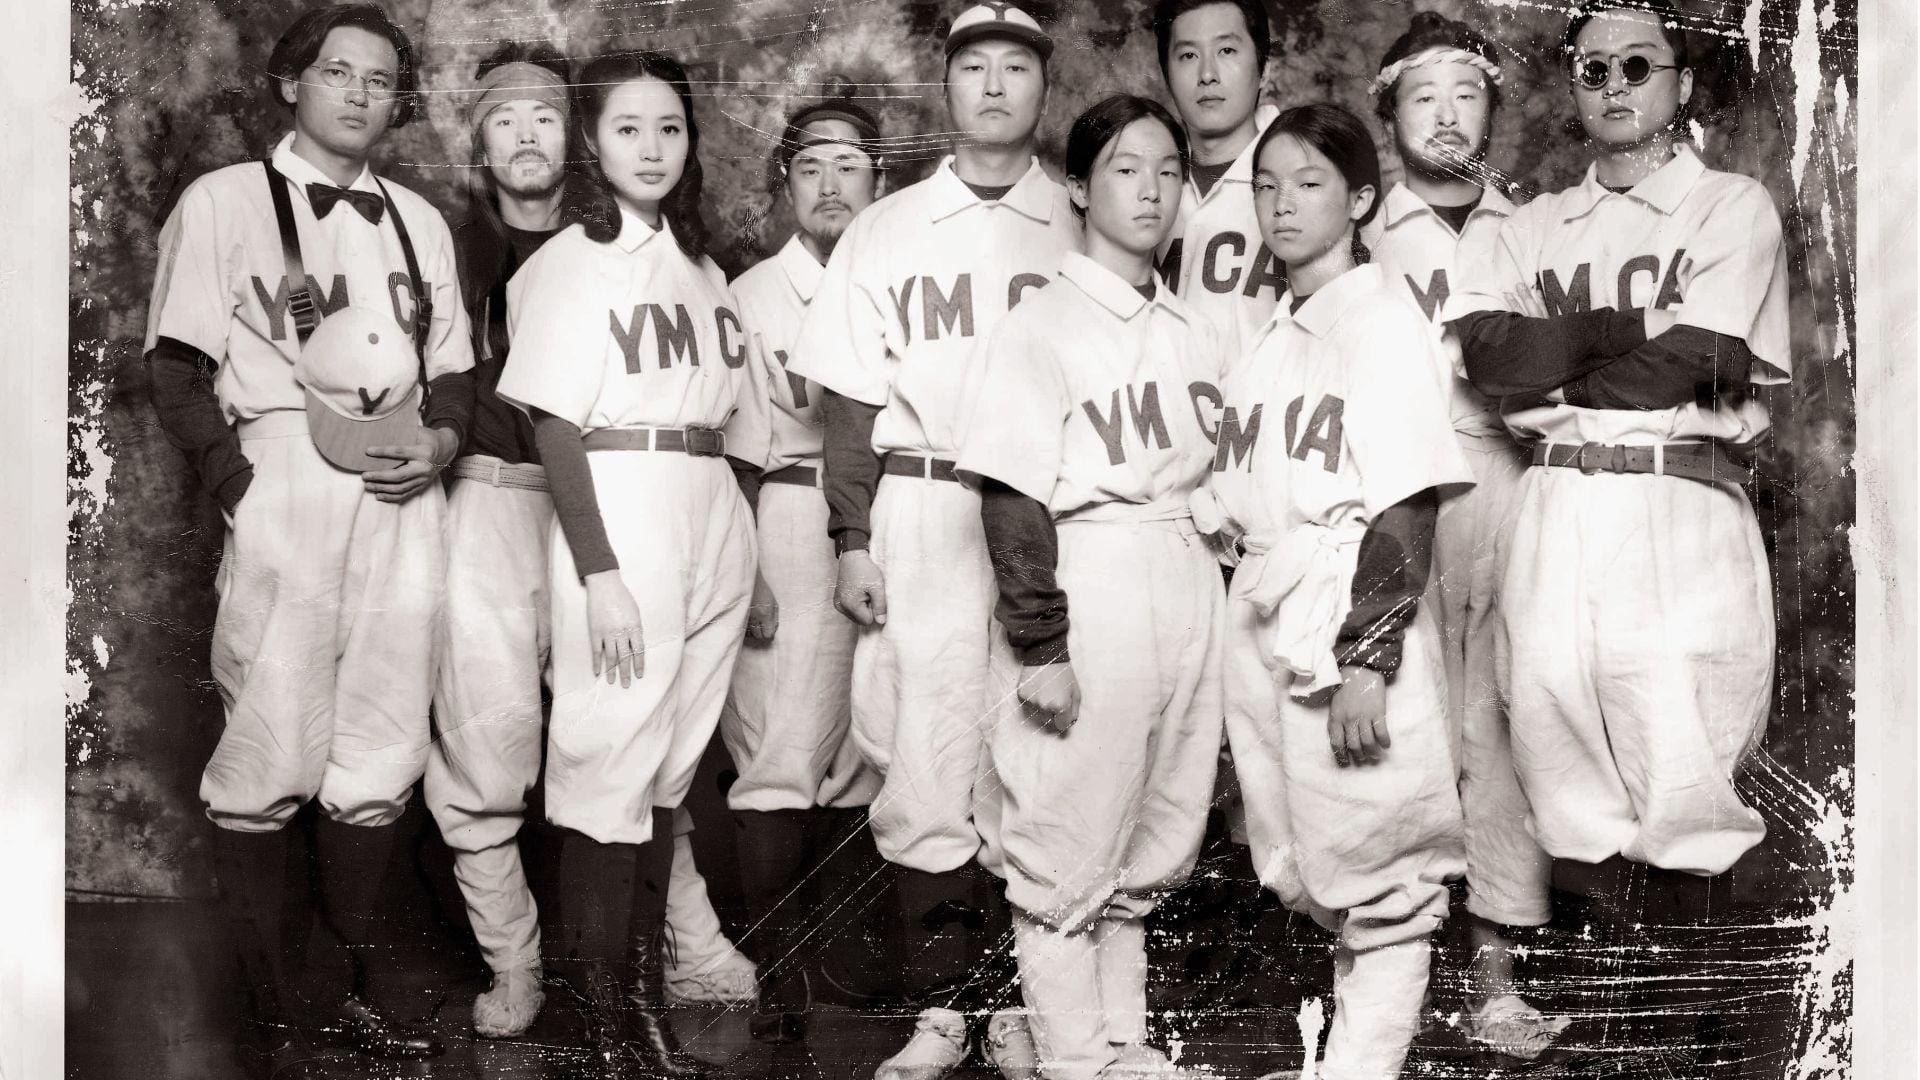 YMCA Baseball Team backdrop